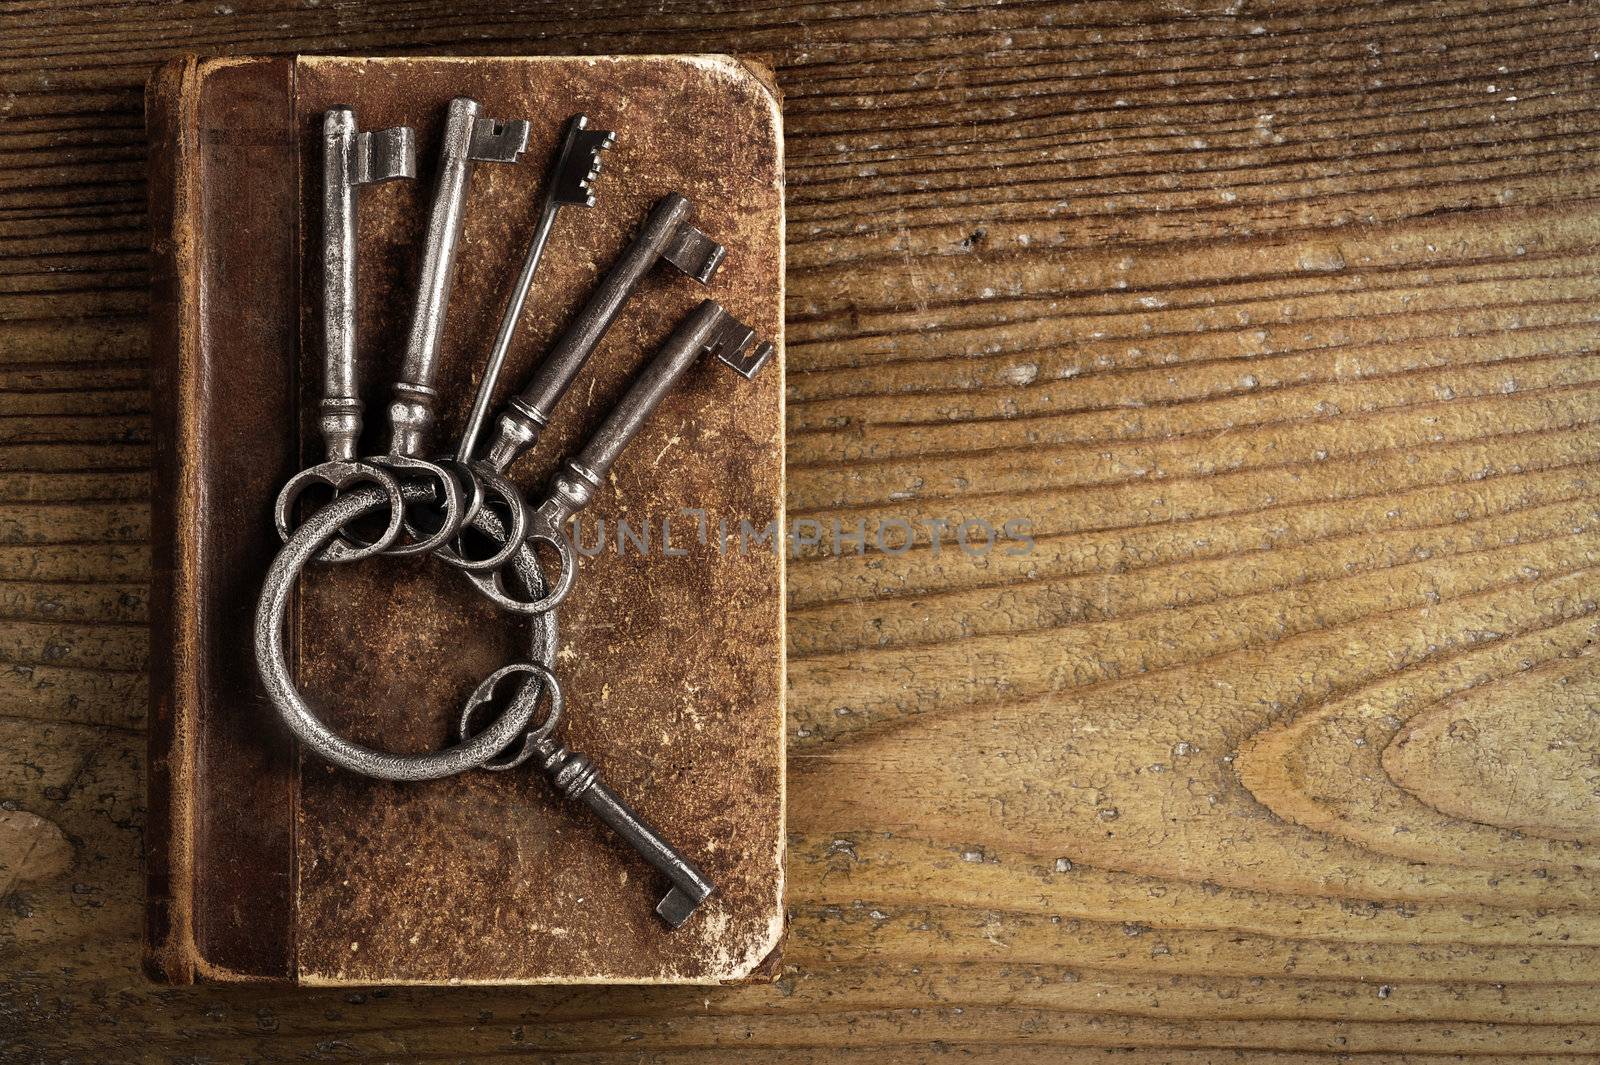 old keys on a old book, antique wood background